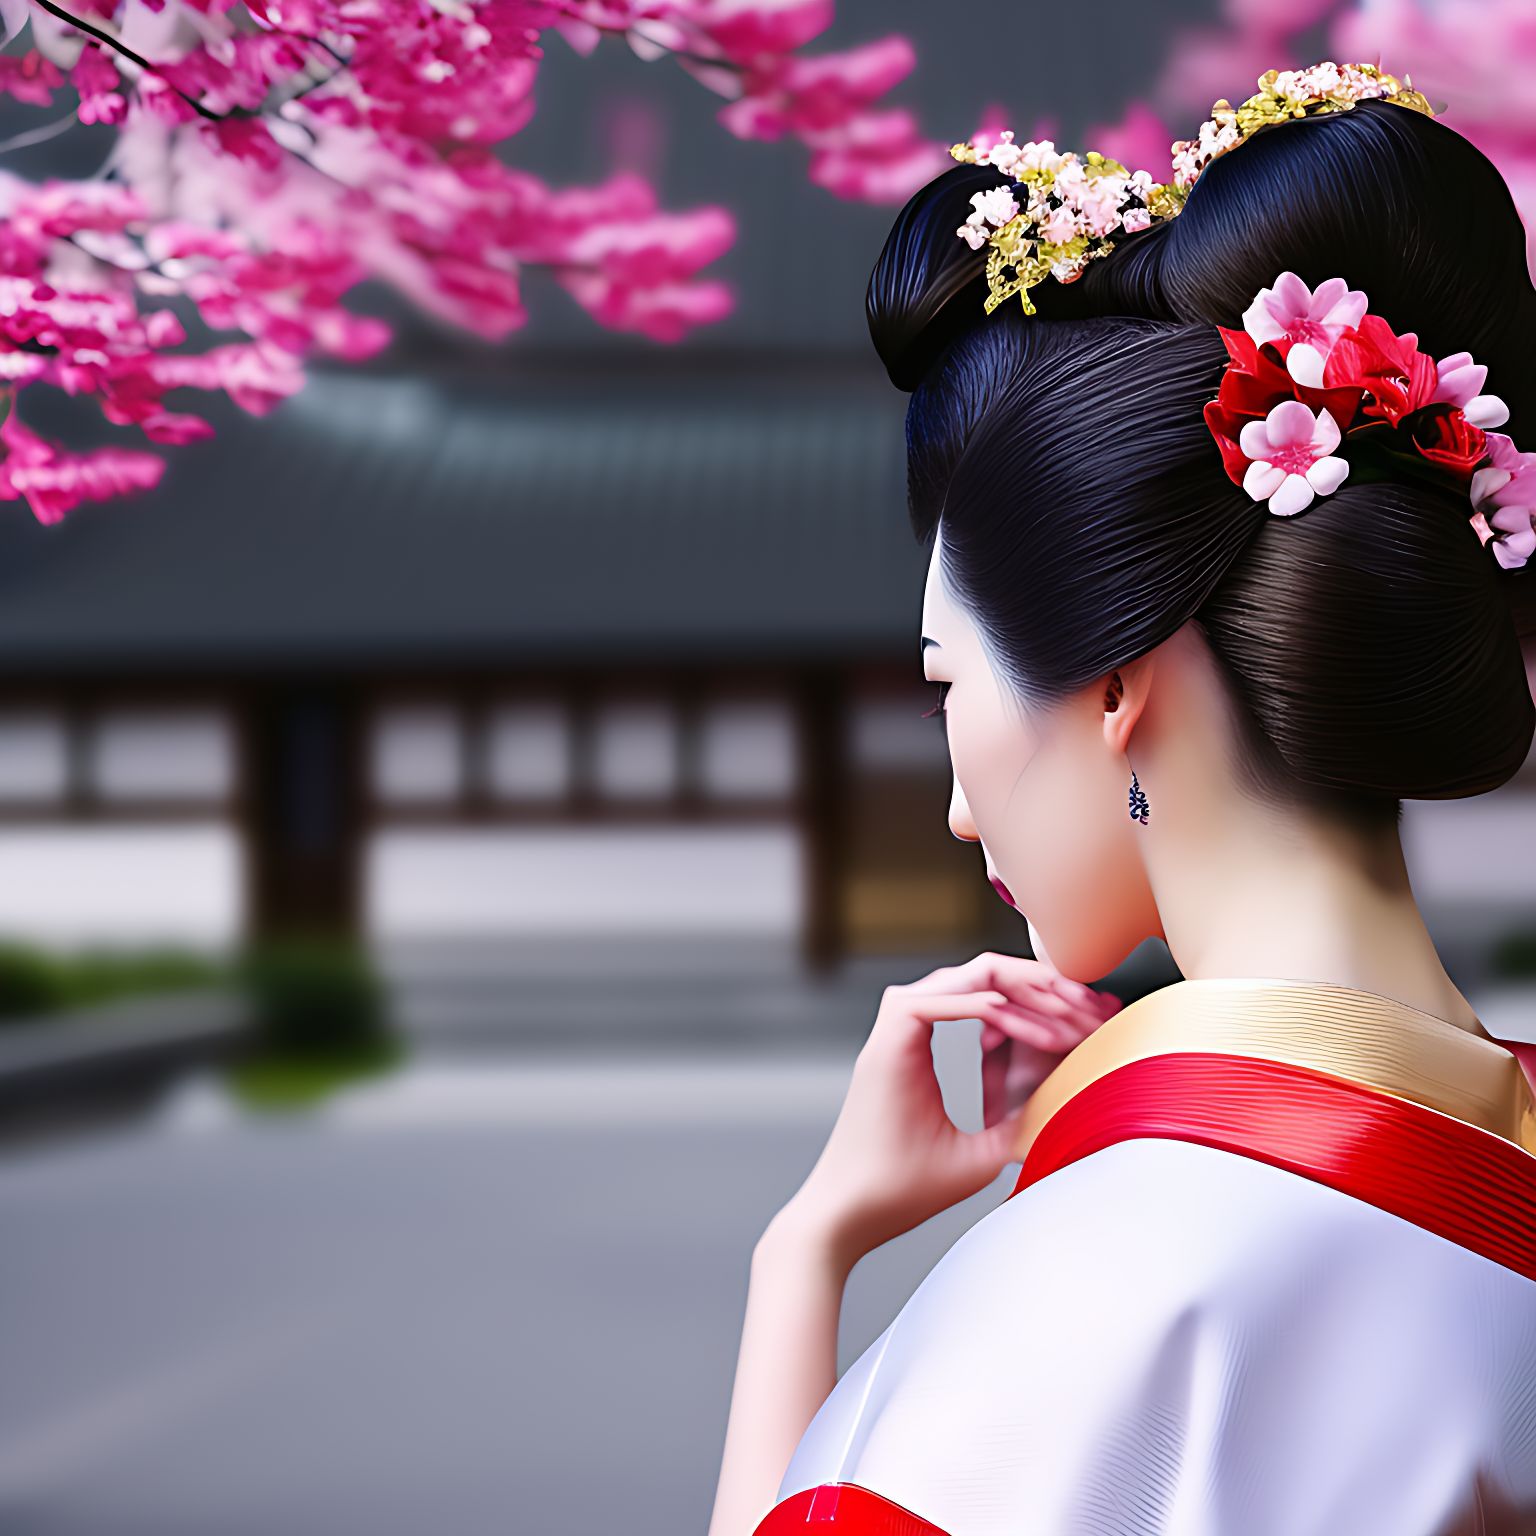 japanese geisha sakura blossoms on the kimono , award winning photo, Digital art, Concept art, Digital painting, Artstation, Sharp focus, Illustration, very coherent, high quality eyes good quality